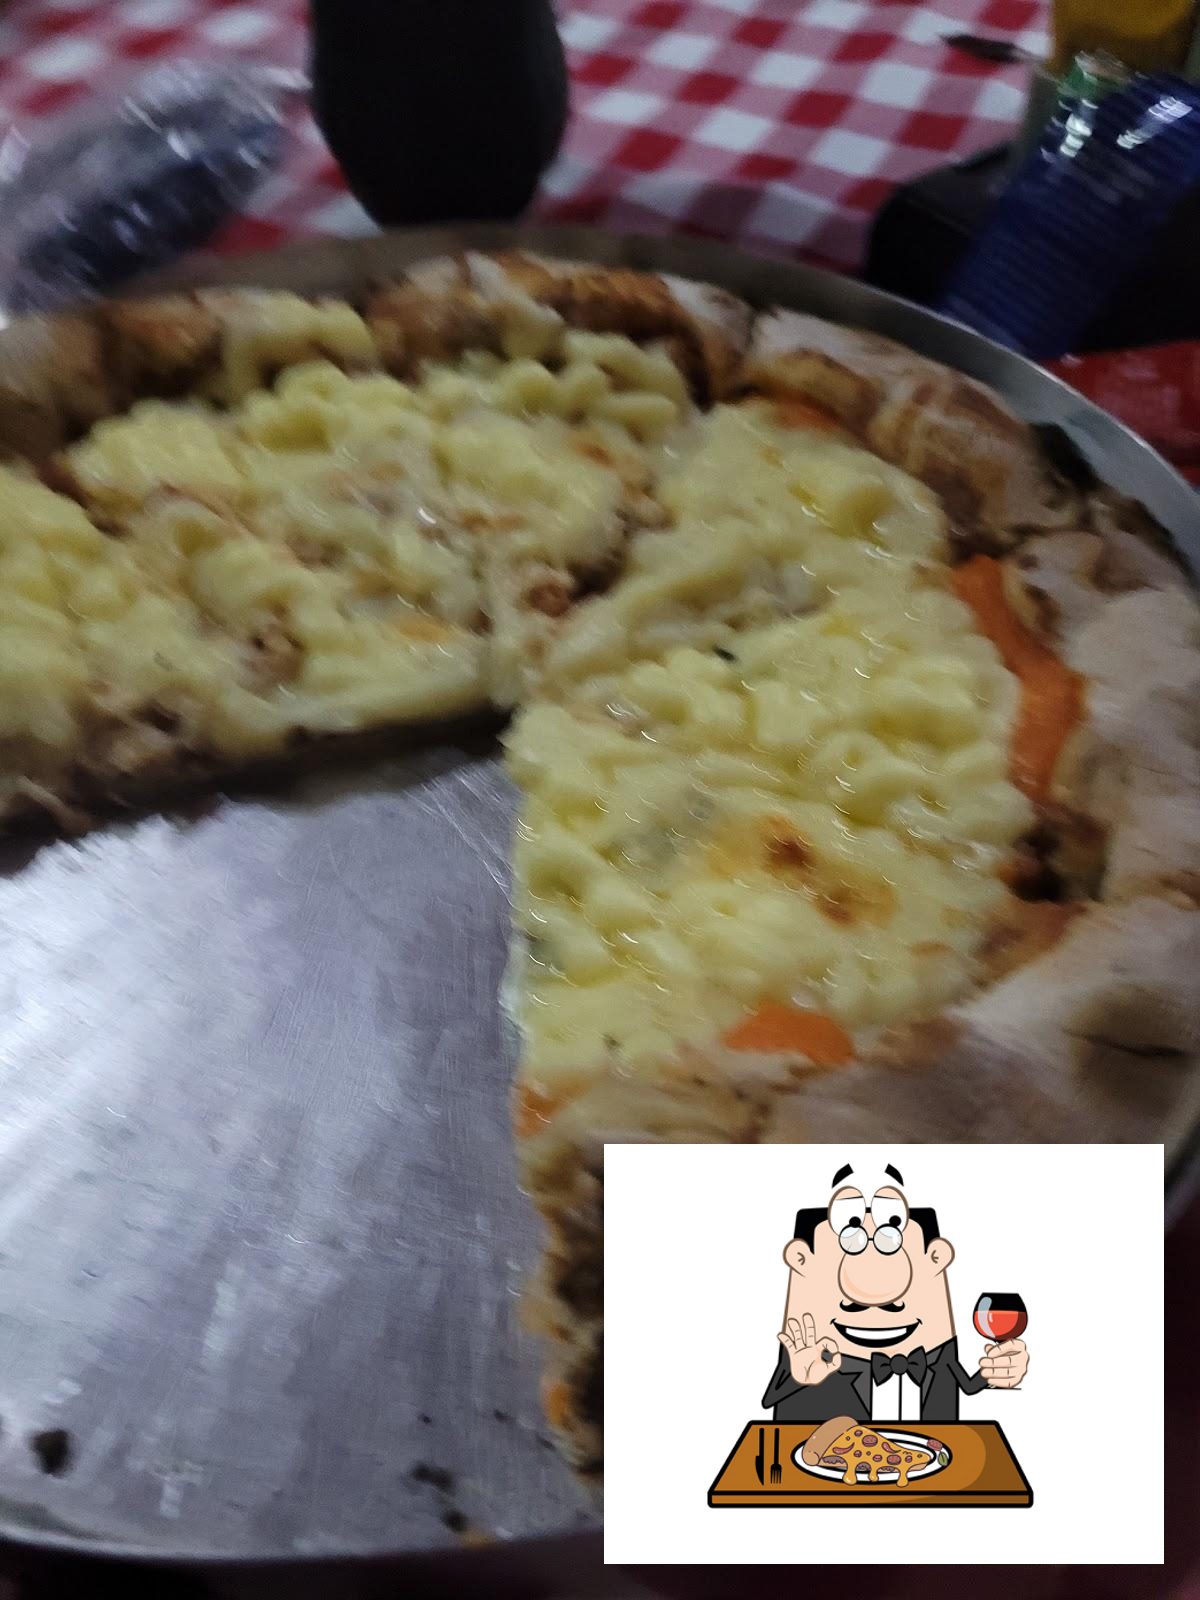 Papa Pizzas Estância Velha - A felicidade estampada na cara de